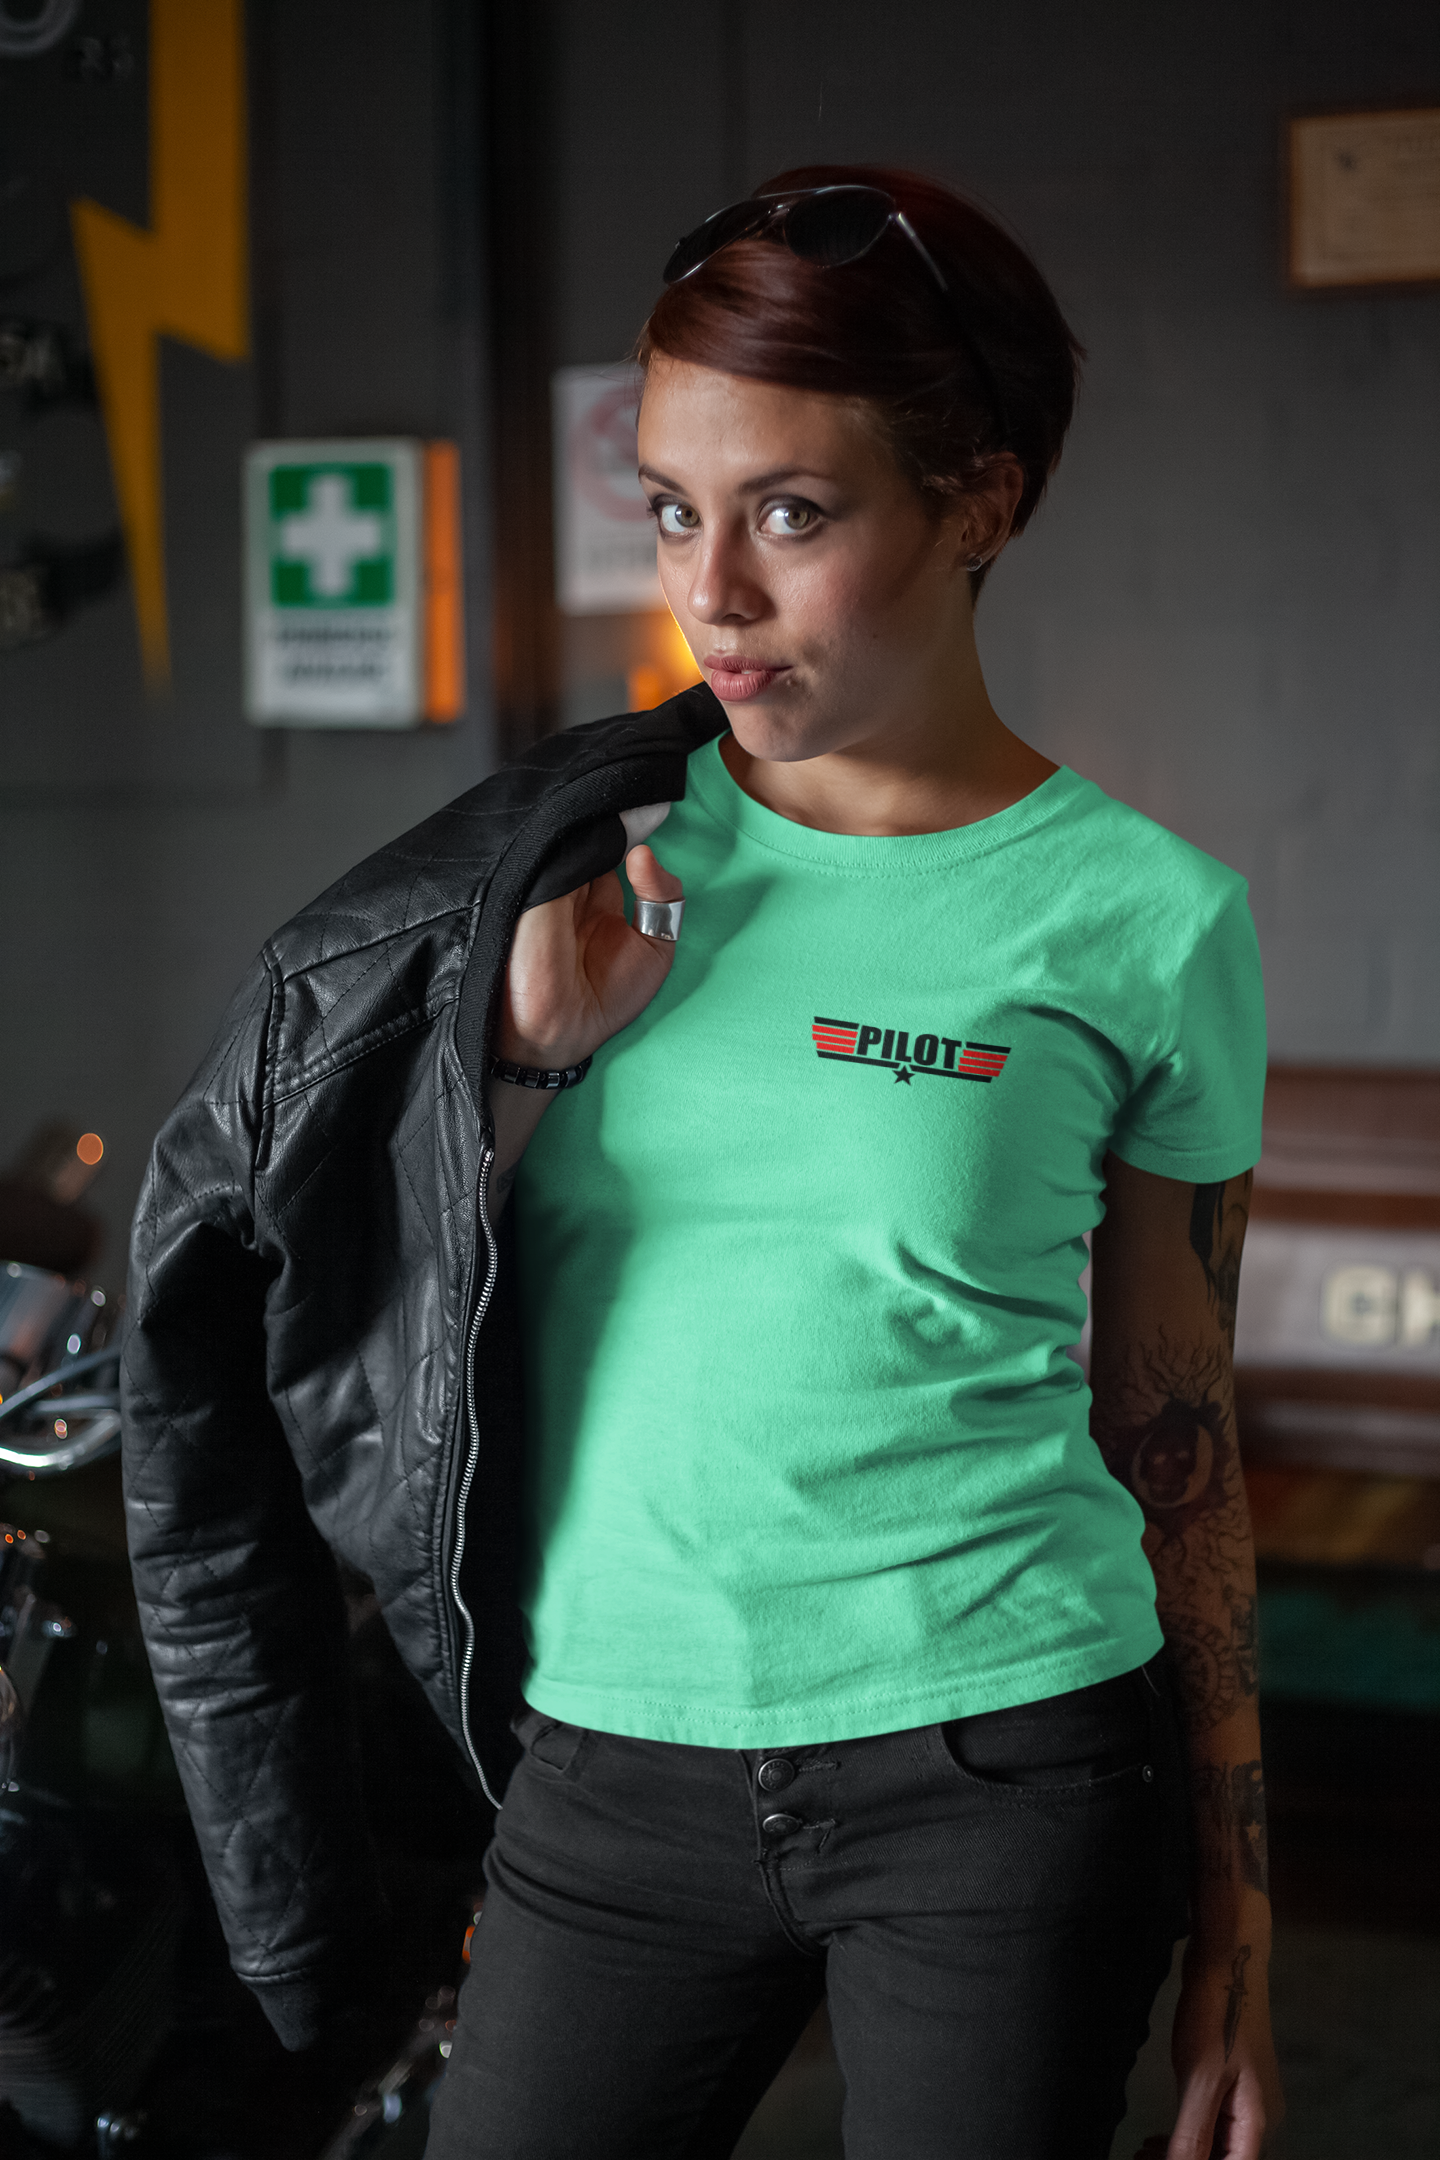 Pilot Red Coded Side Pocket Pilot Women Half Sleeves T-shirt- FunkyTeesClub